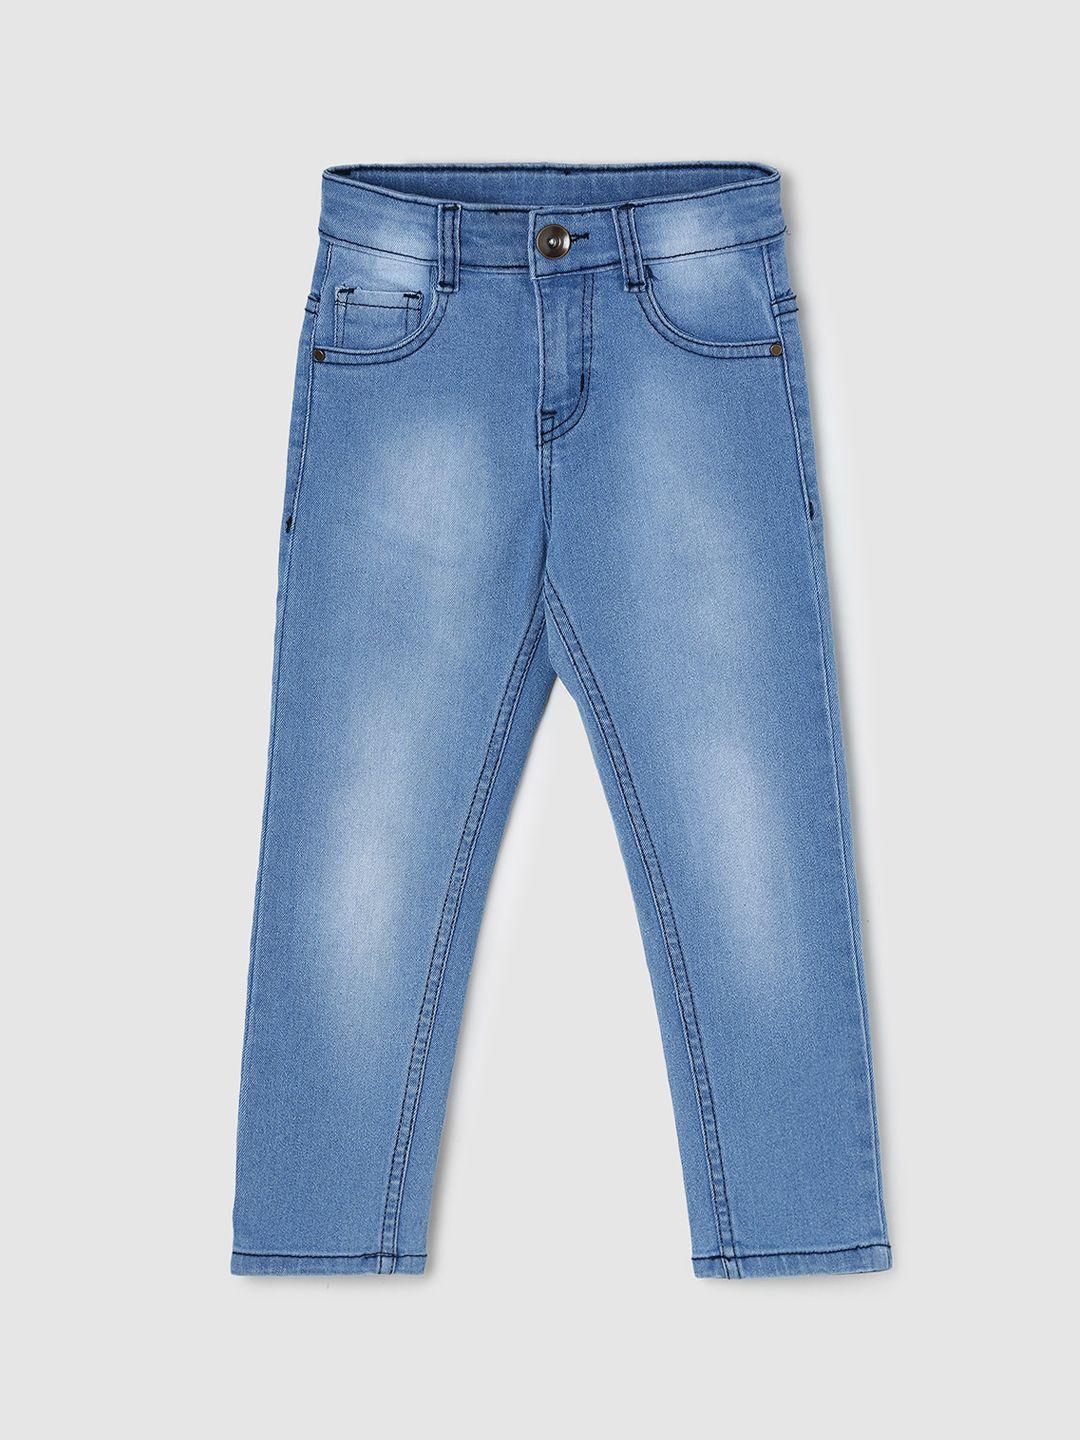 max Boys Blue Light Fade Cotton Jeans